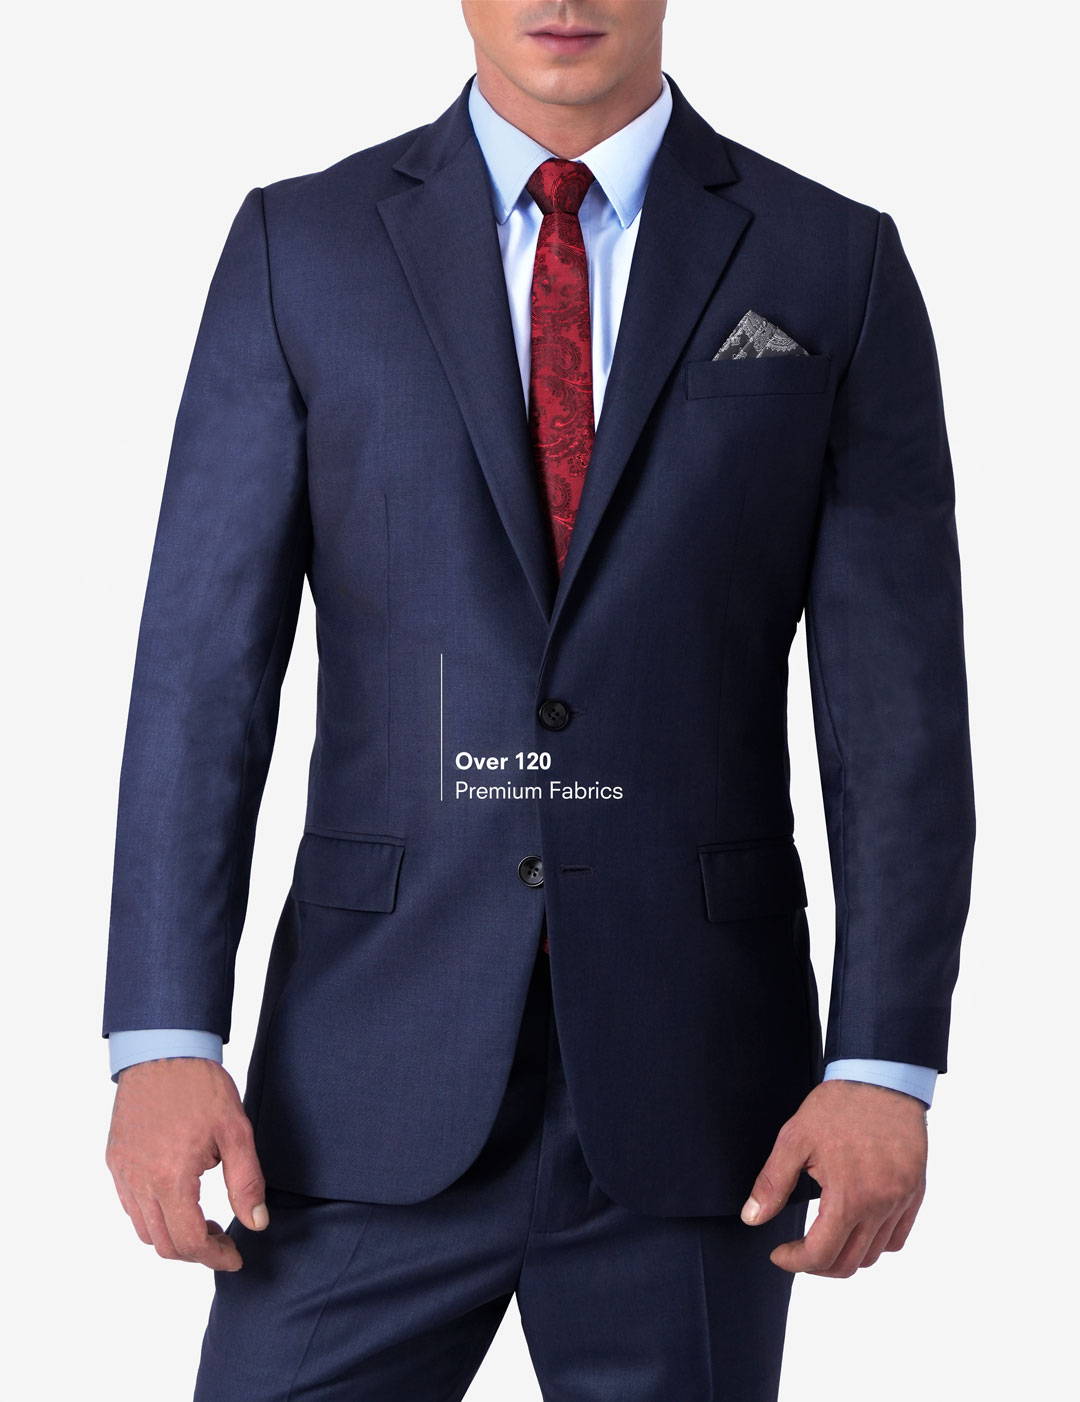 charcoal grey suit - text overlay Over 120 Premium Fabrics